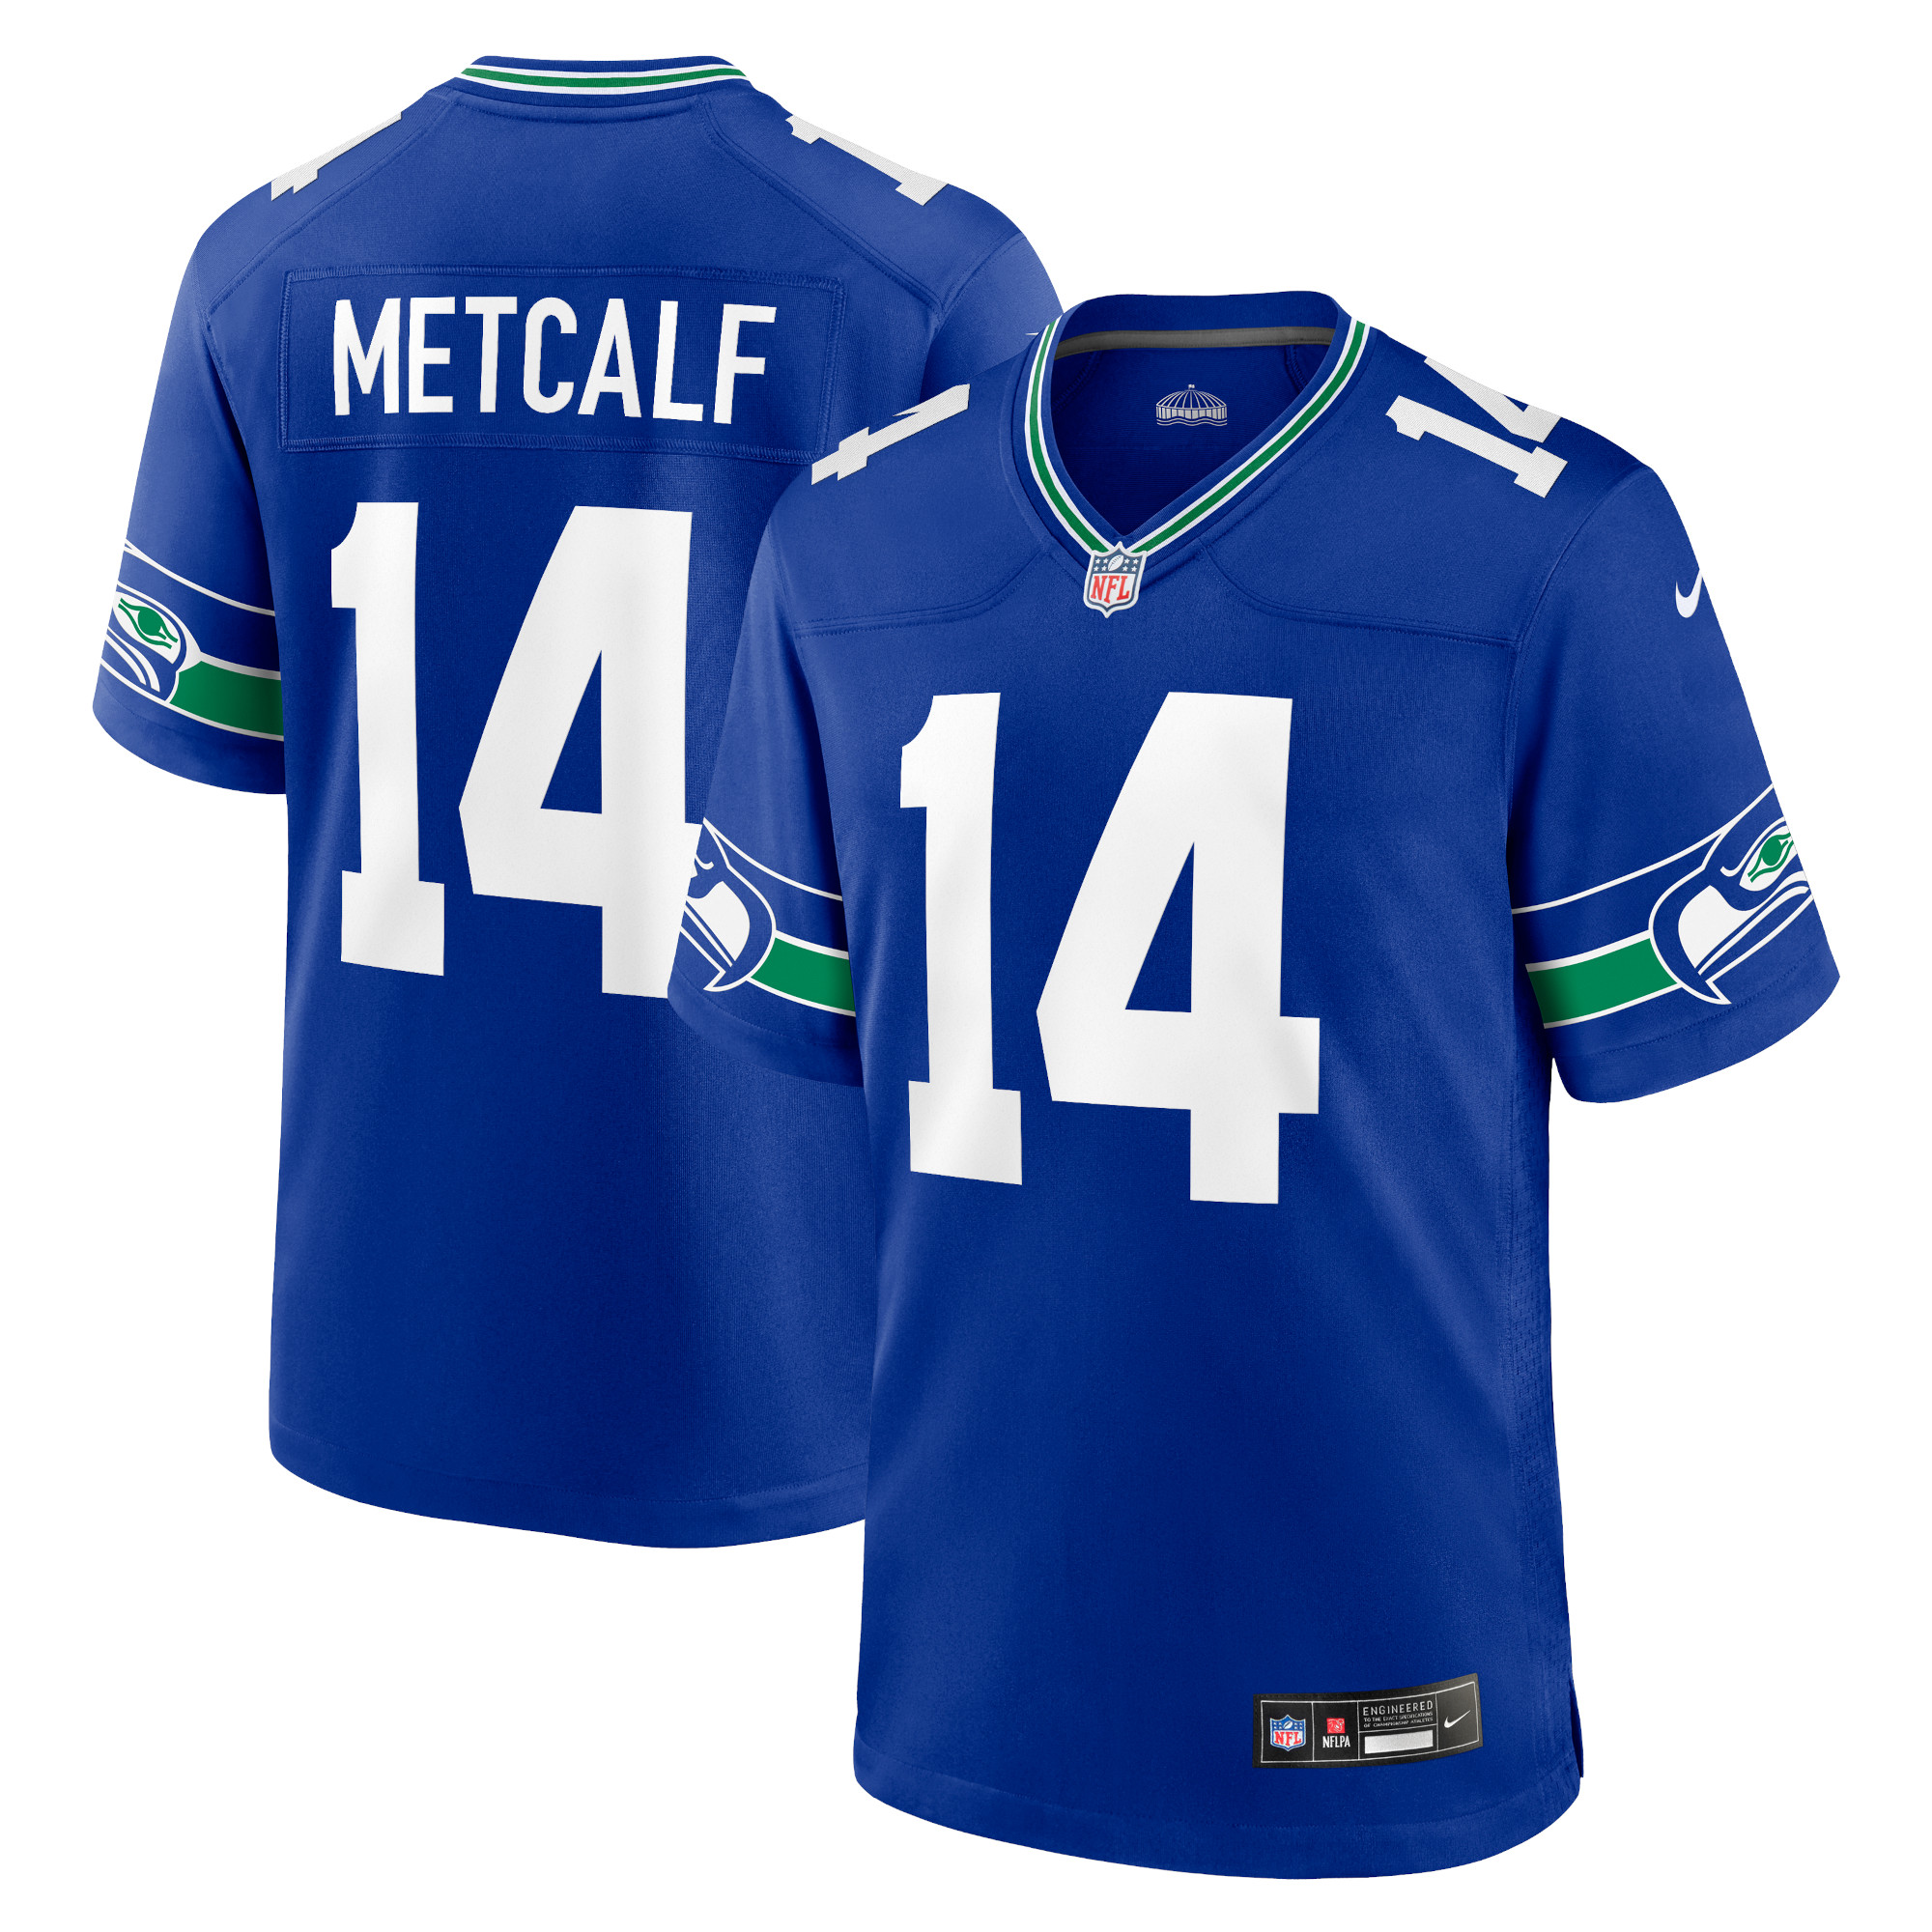 Seattle Seahawks Nike Alternate Game Jersey – Royal – DK Metcalf – Herren